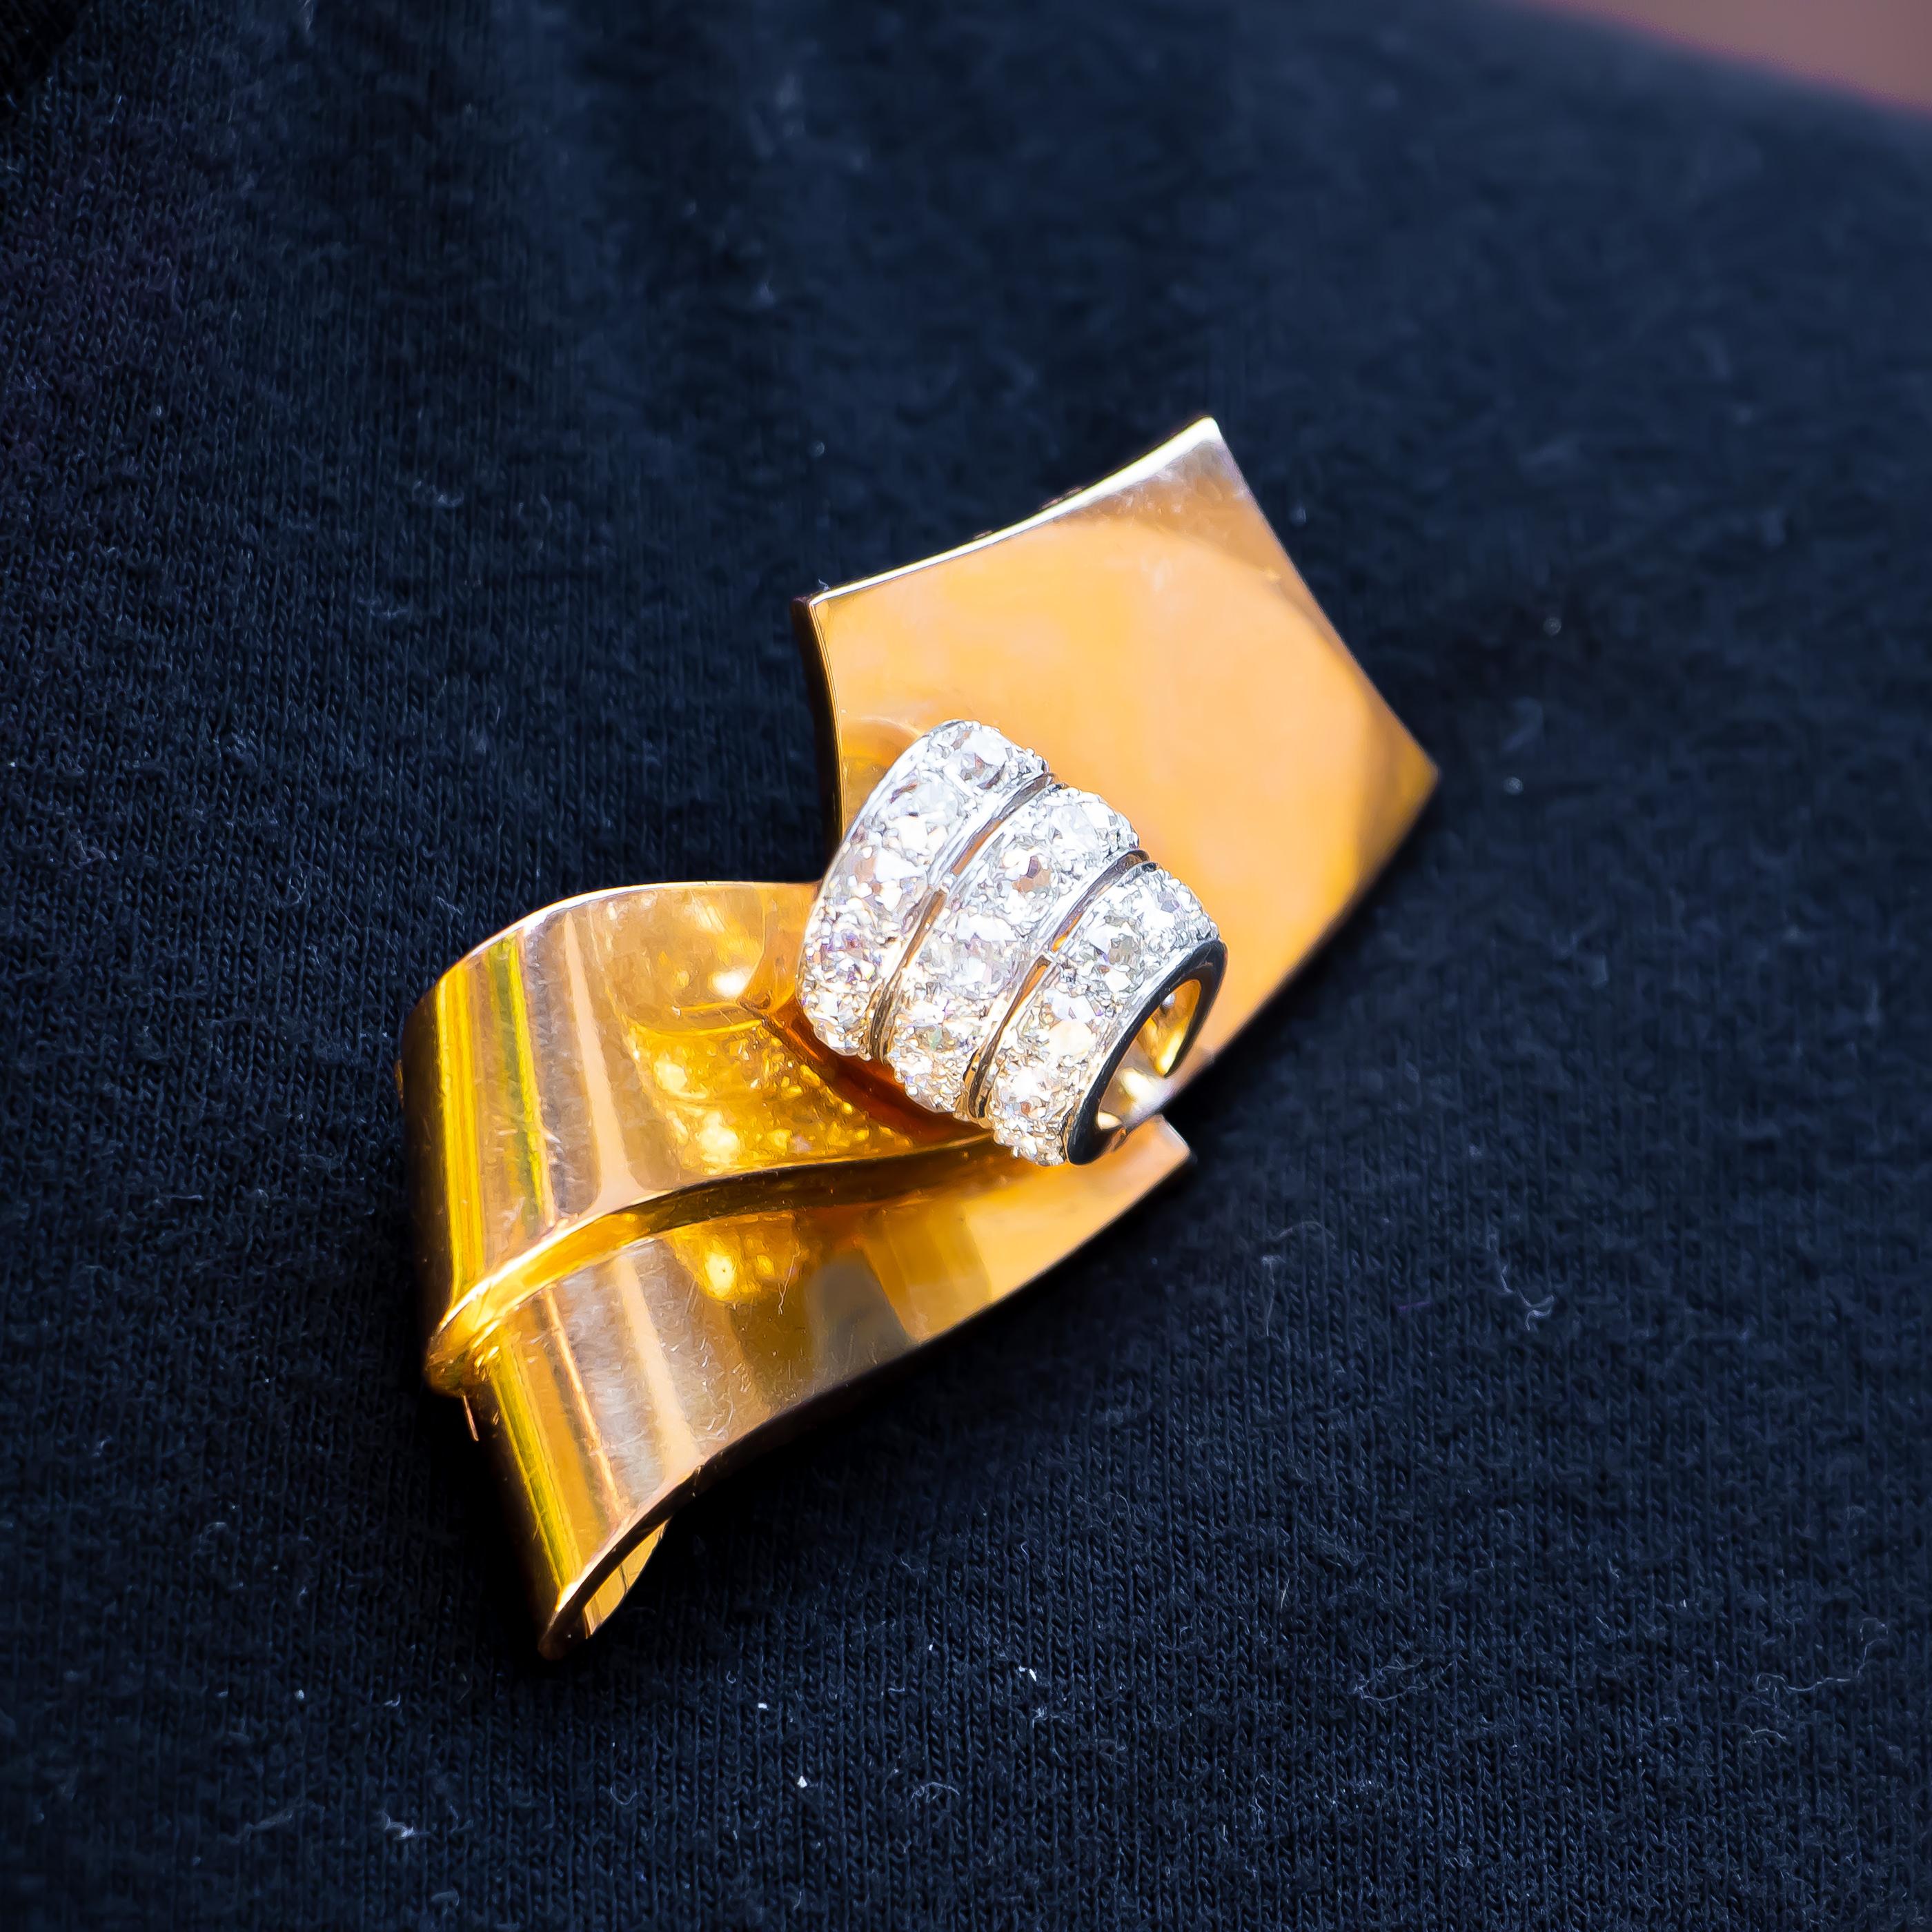 Art Deco Chaumet Diamond Brooch 5.2 Carat 18 Karat Yellow Gold